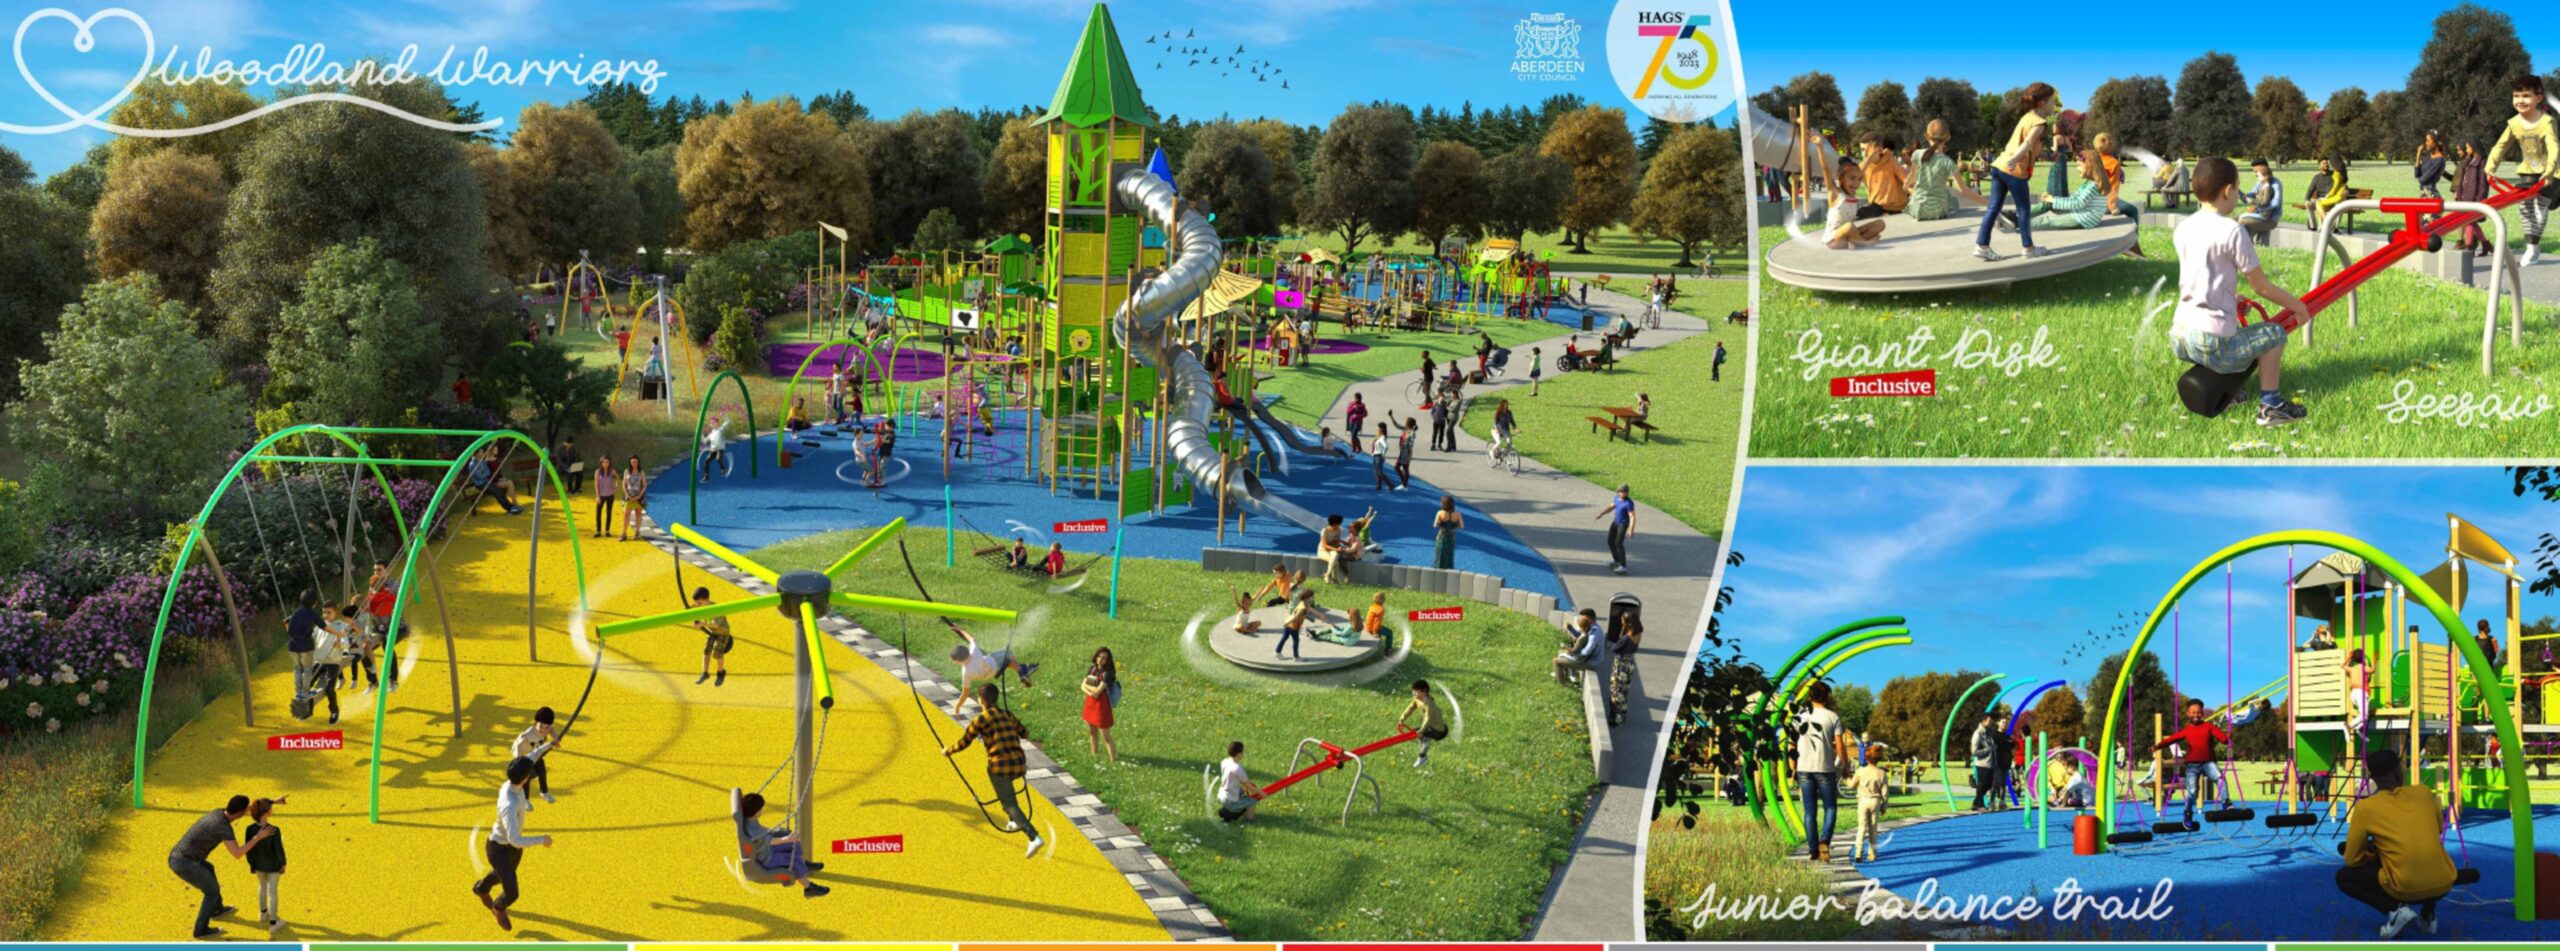 The bright plans for Hazlehead Park's £1 million playpark. Image: Aberdeen City Council